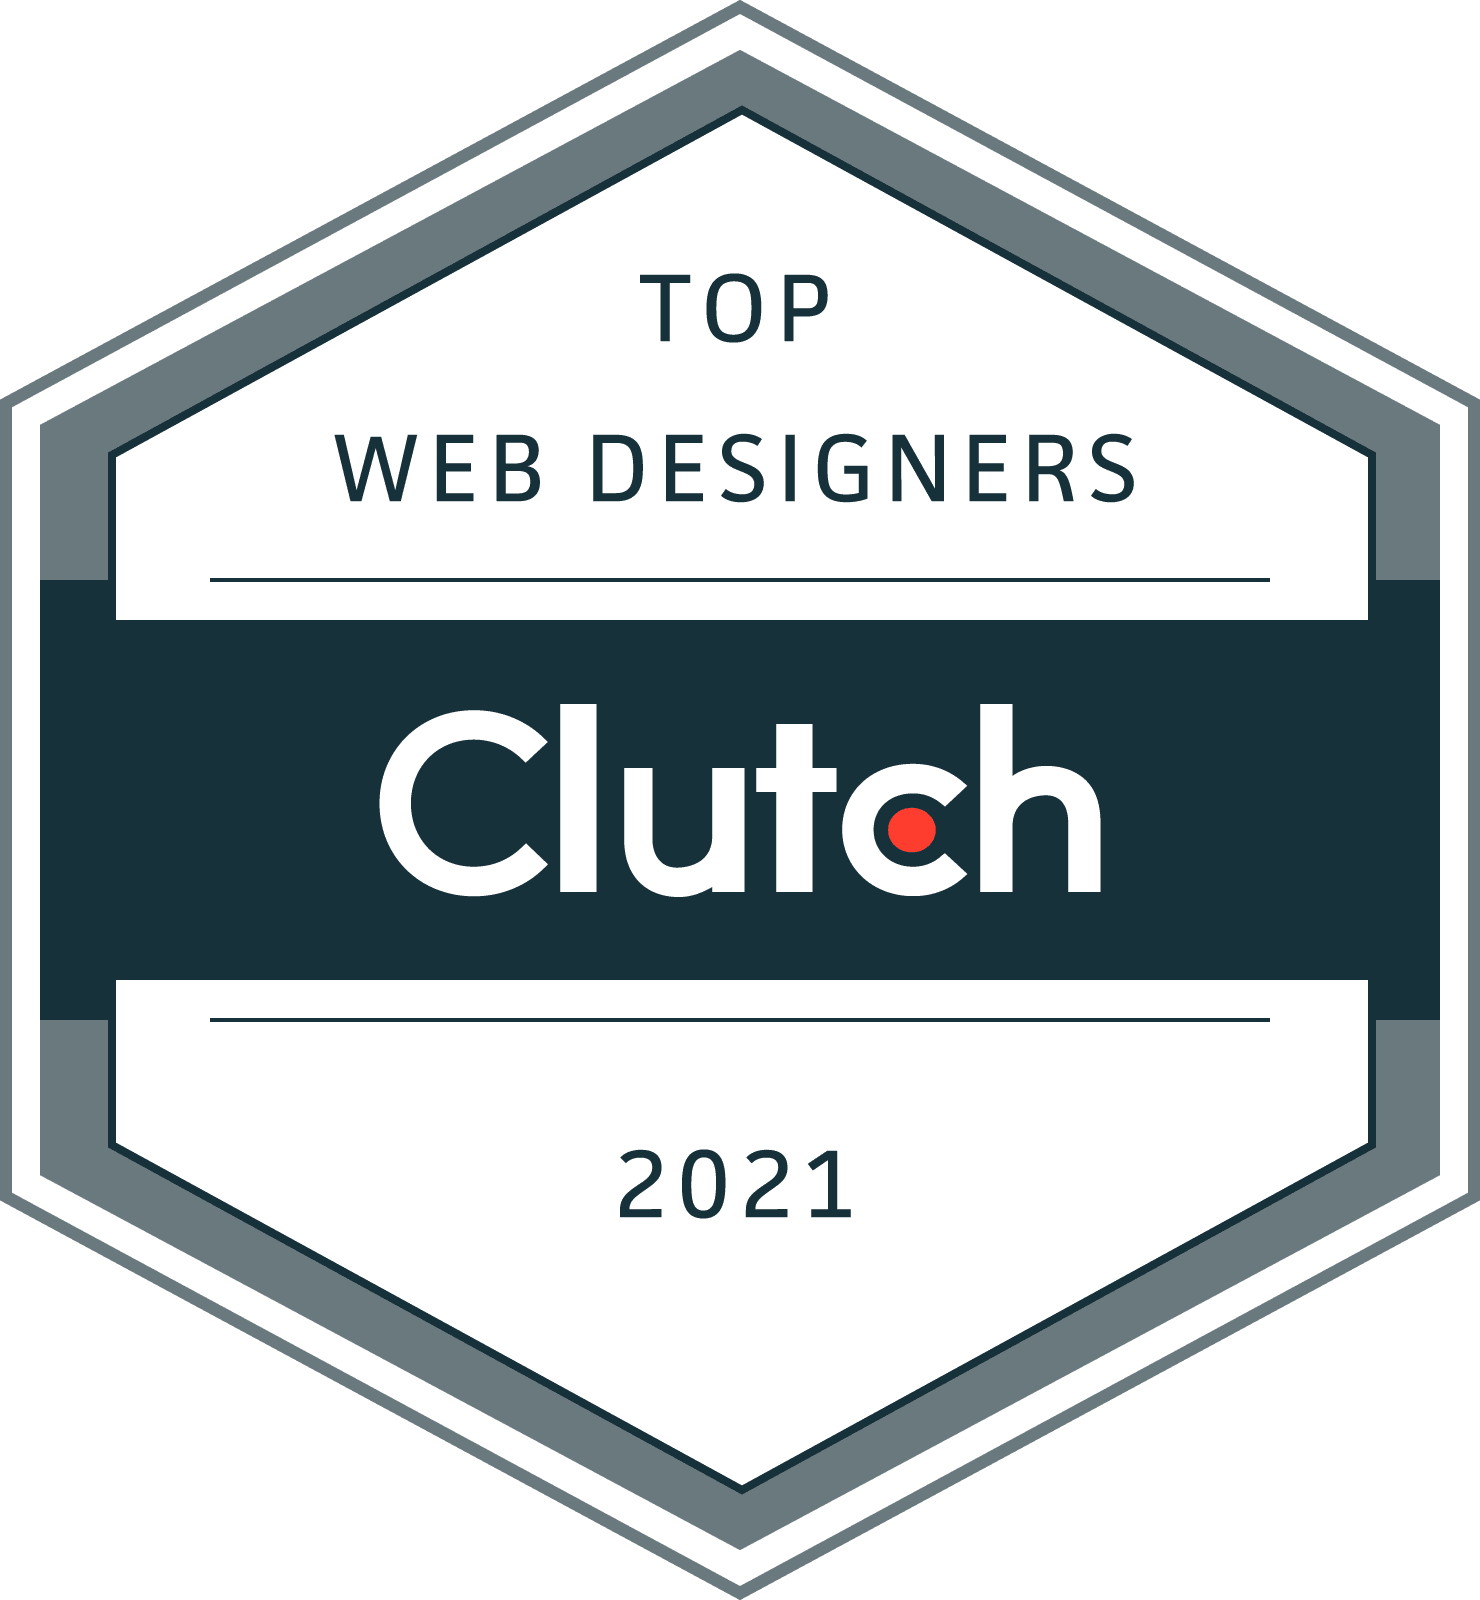 Top Web Designers Seattle in 2021 by Clutch